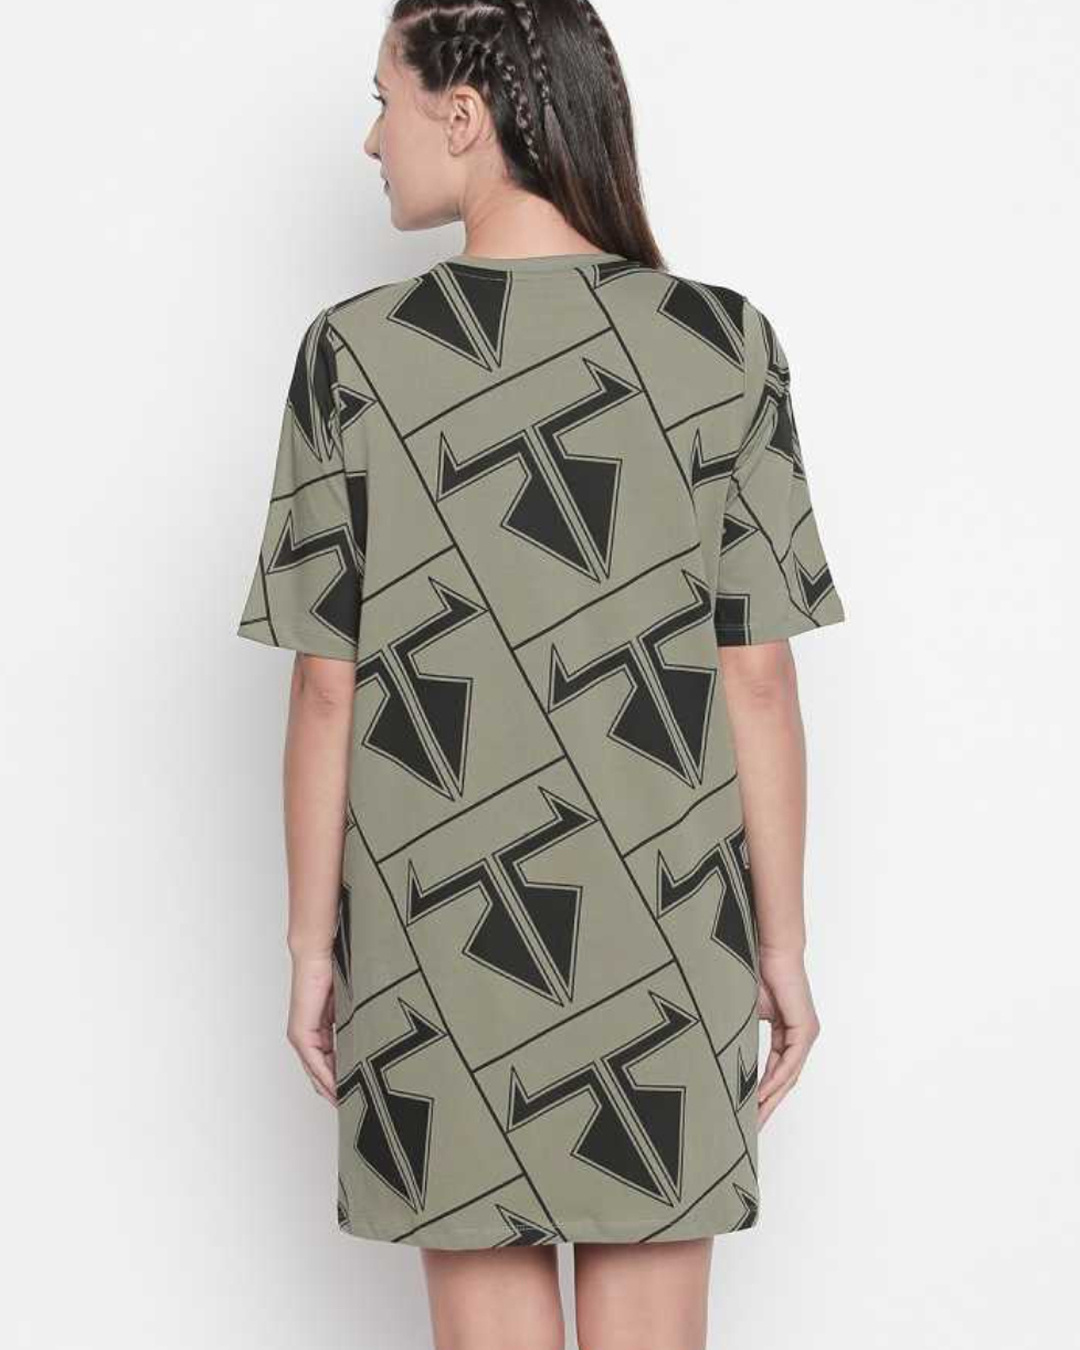 Shop Graphic Print Olive Dress For Women-Back